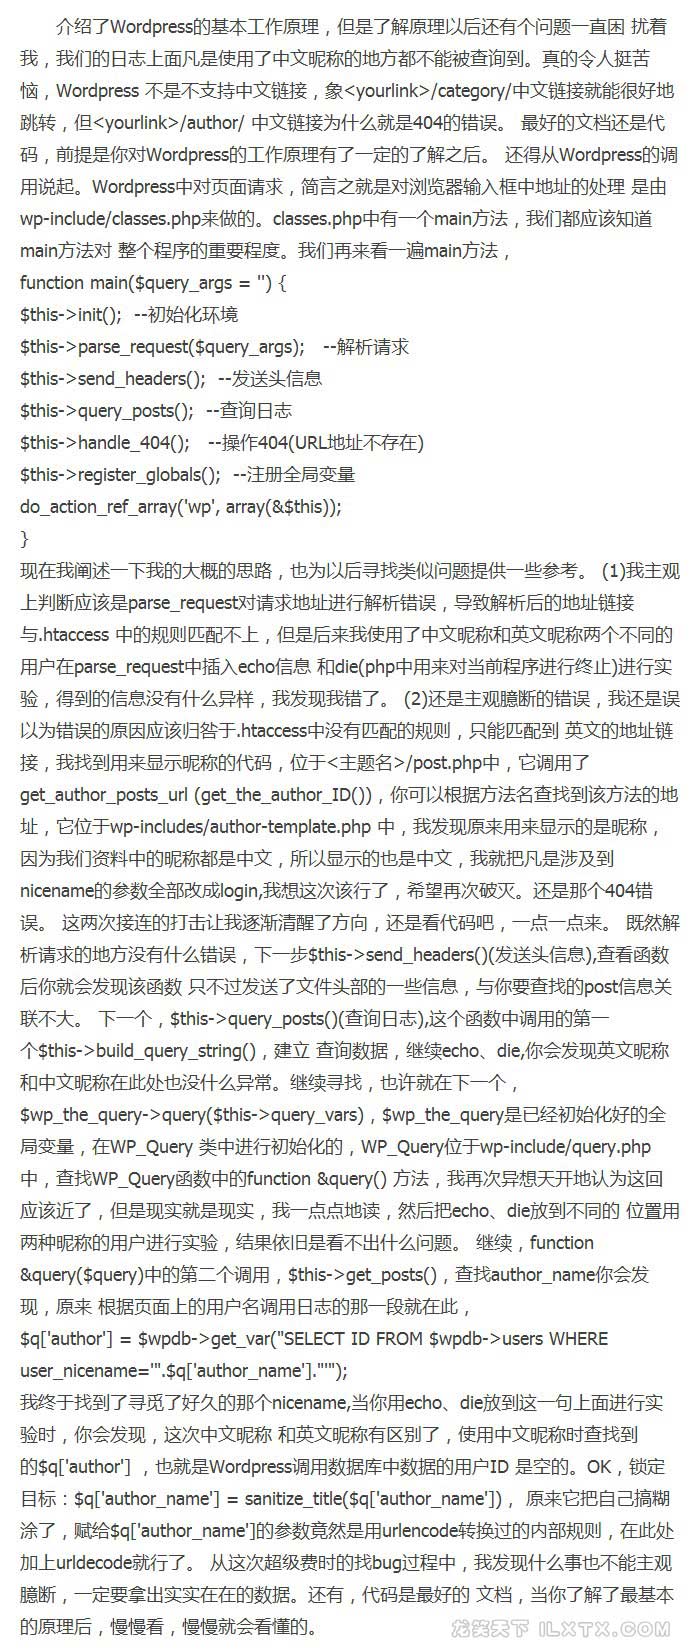 WordPress 用户存档链接中文昵称 404 问题的思路及解决方法来源